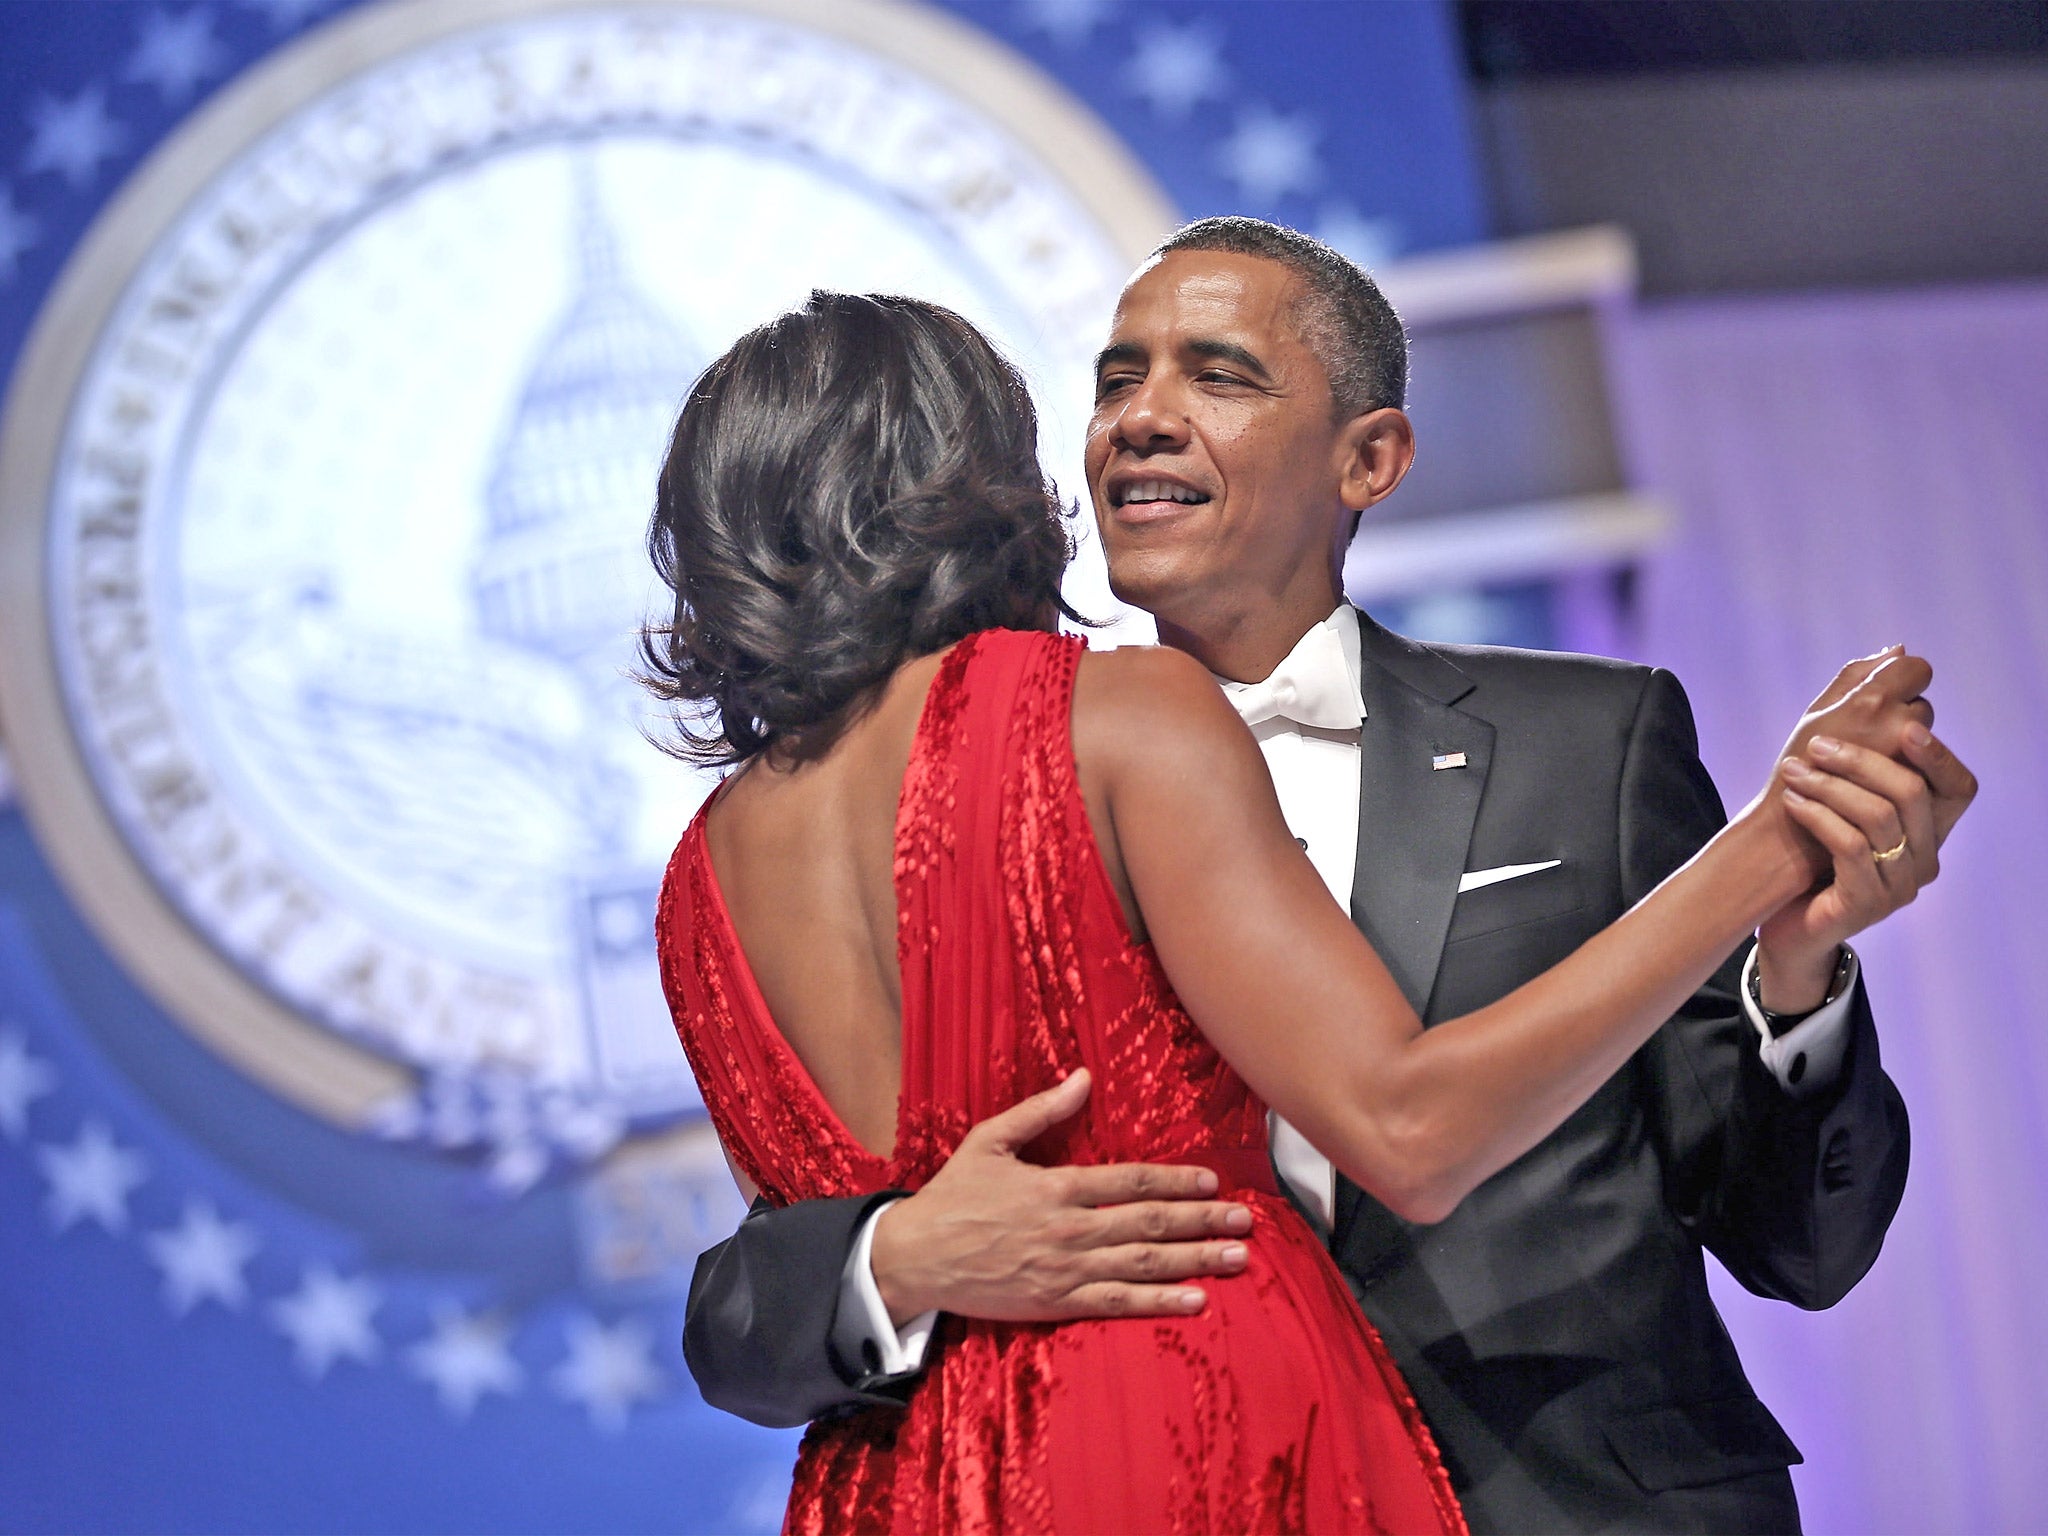 Barack and Michelle Obama dance at the Inaugural Ball in Washington